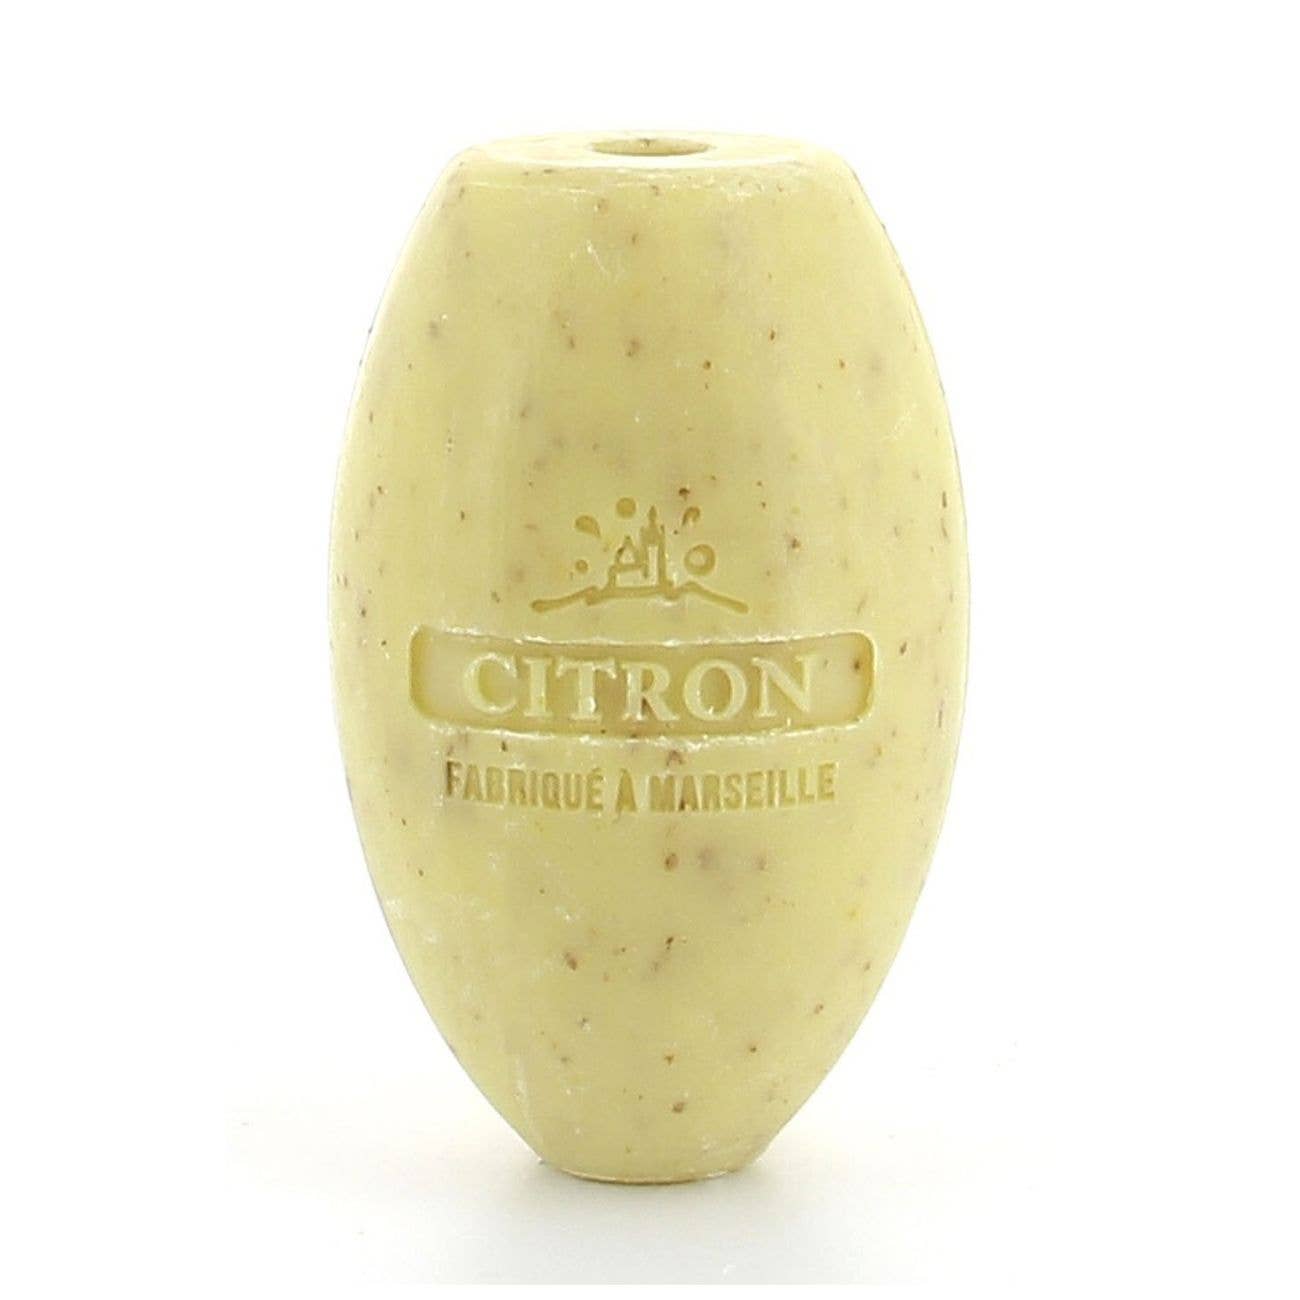 Savons.com (UK Official) - Citron Broye (Lemon) 240g